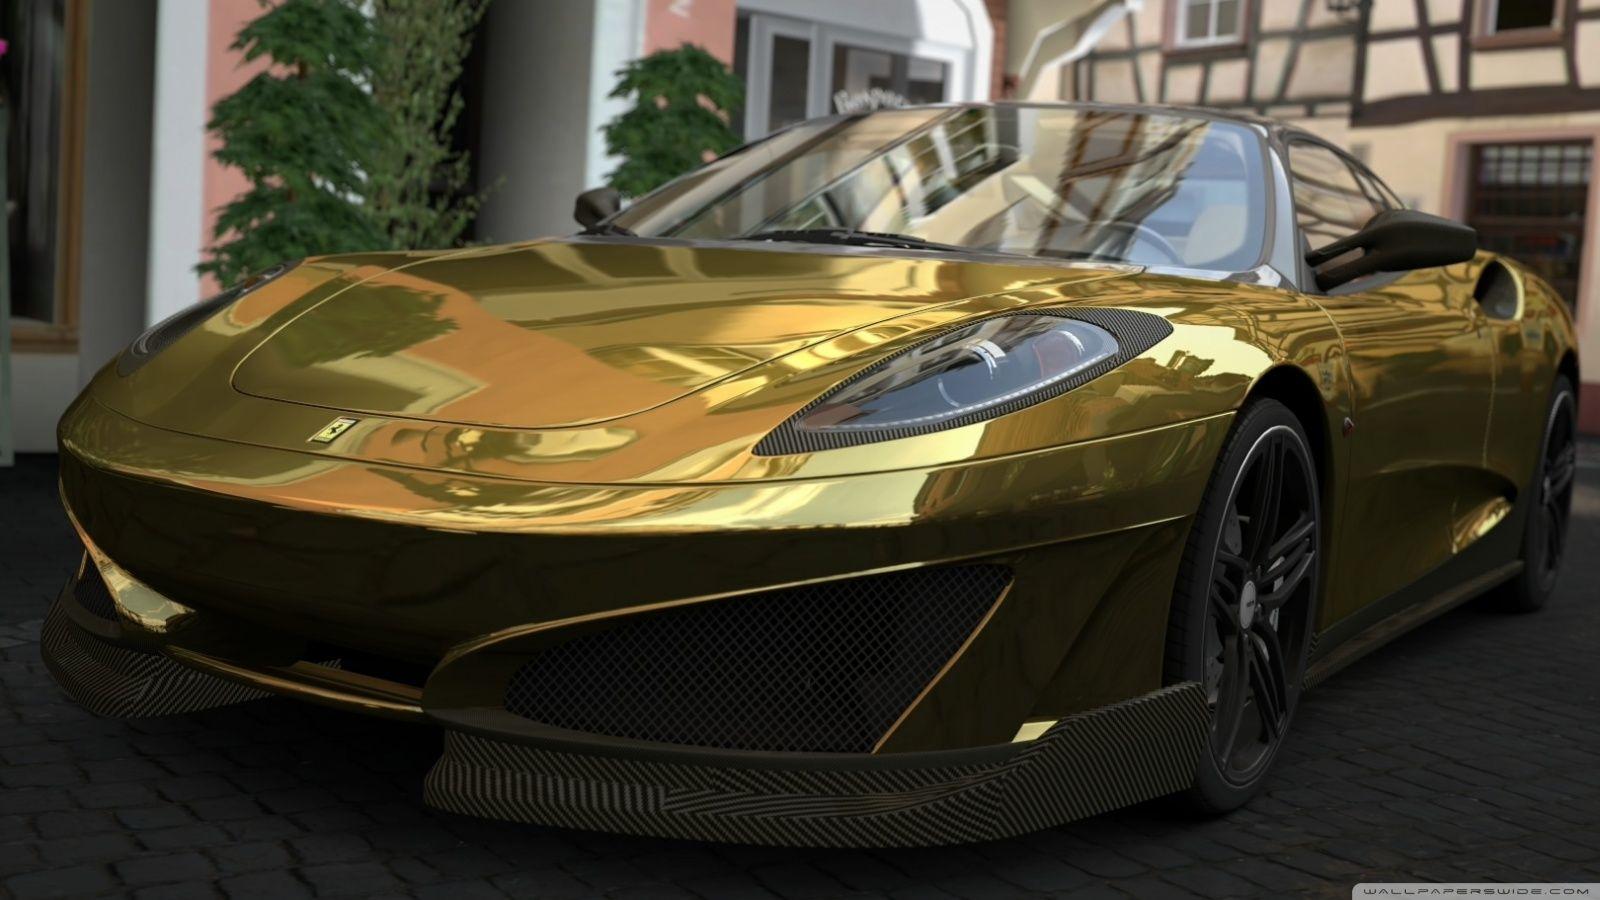 Gold Ferrari Wallpapers - Top Free Gold Ferrari ...